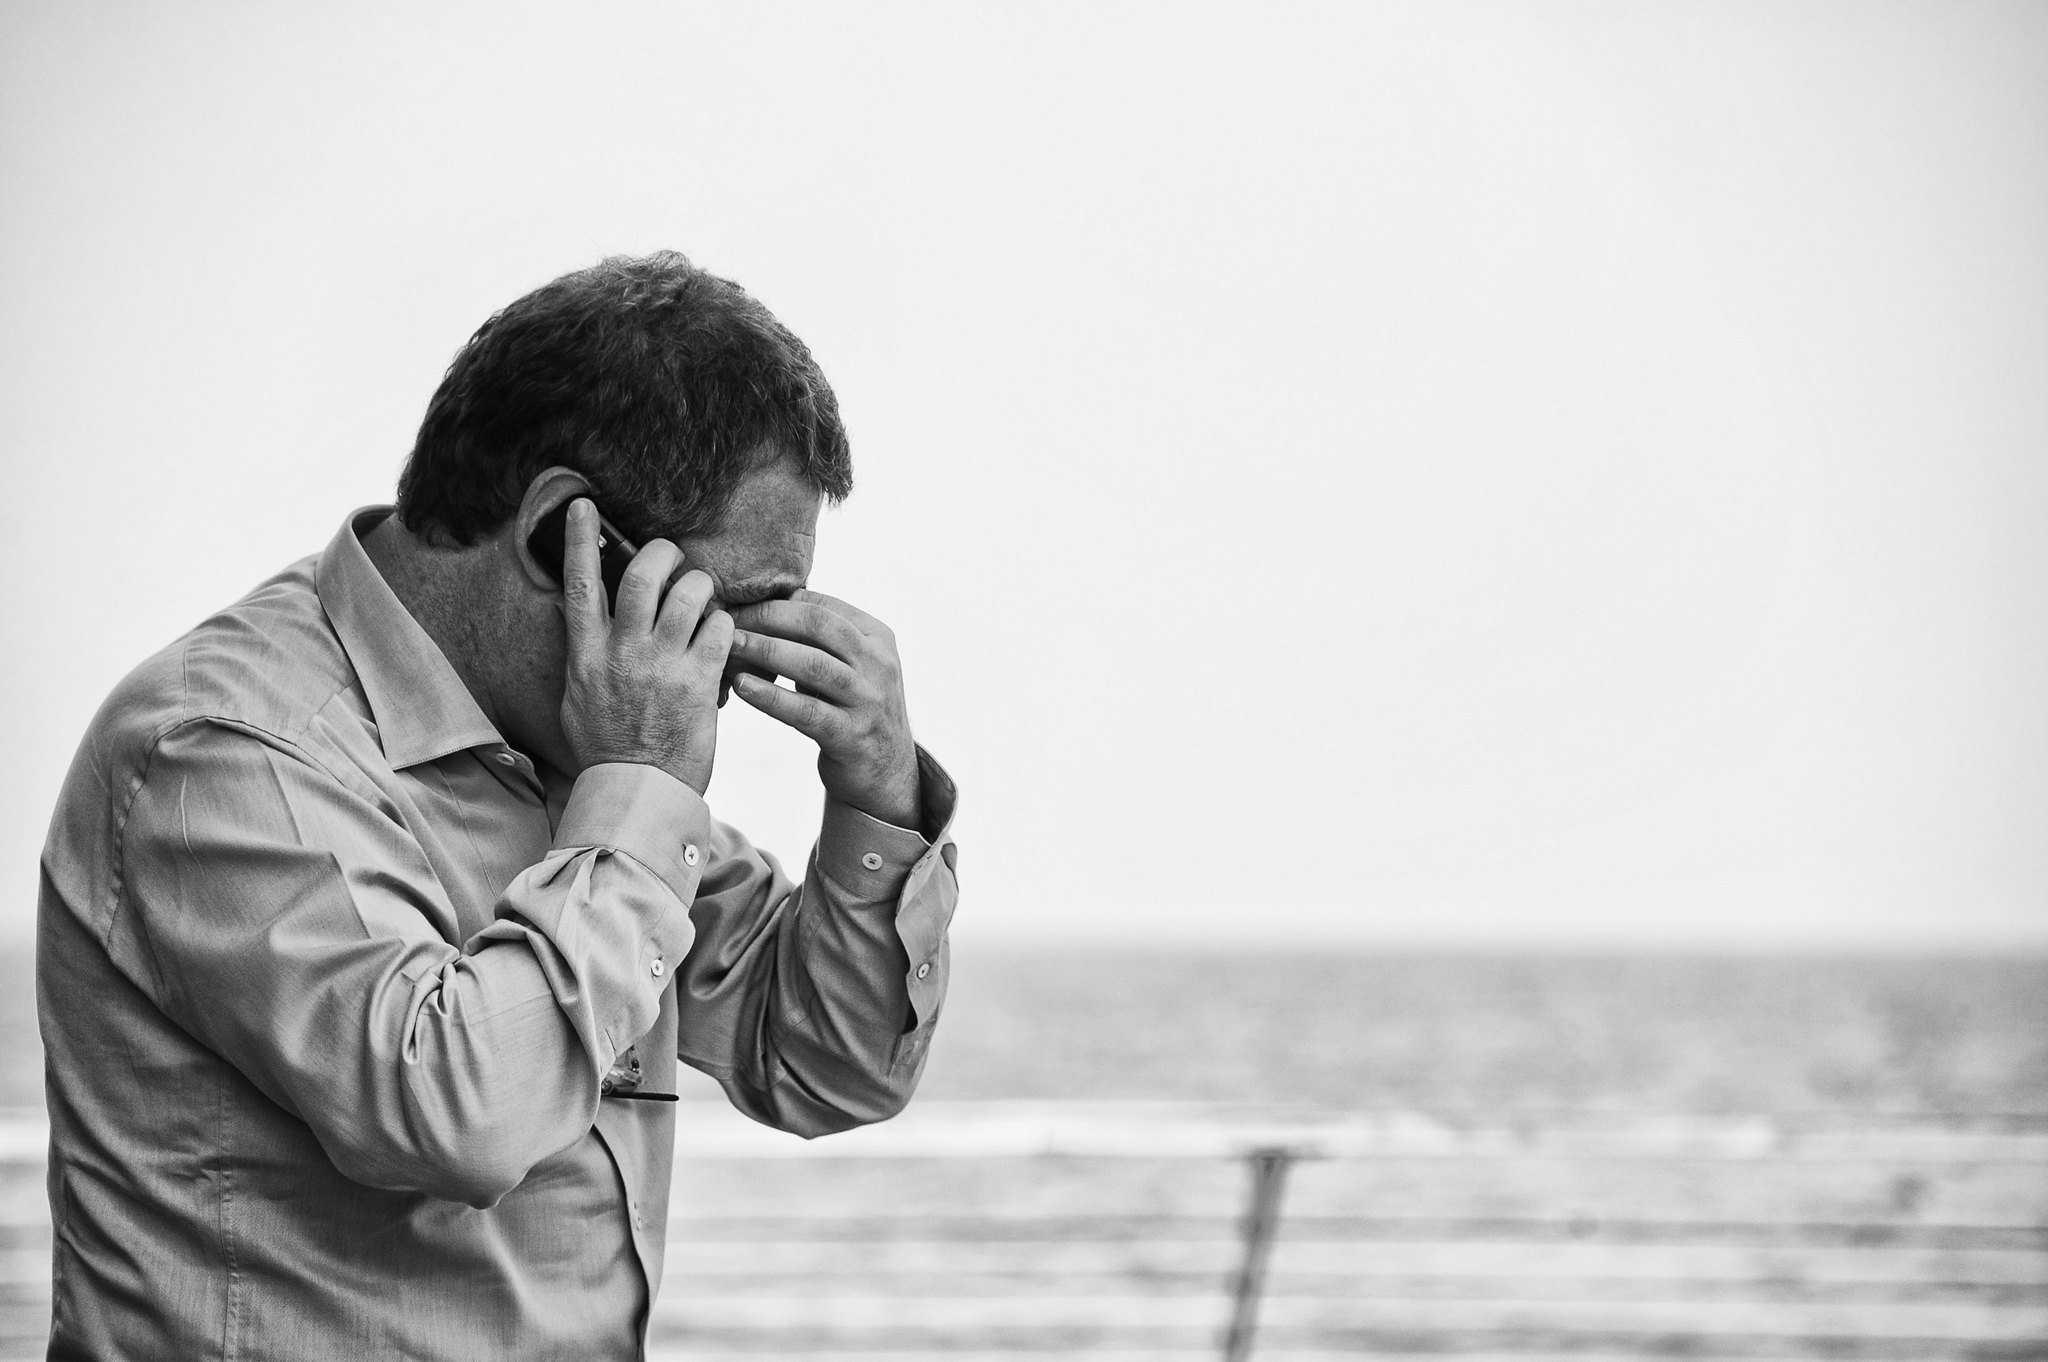 An upset man talking on a cellular phone. Image was taken on September 23, 2011 | Photo: Flickr/Alon